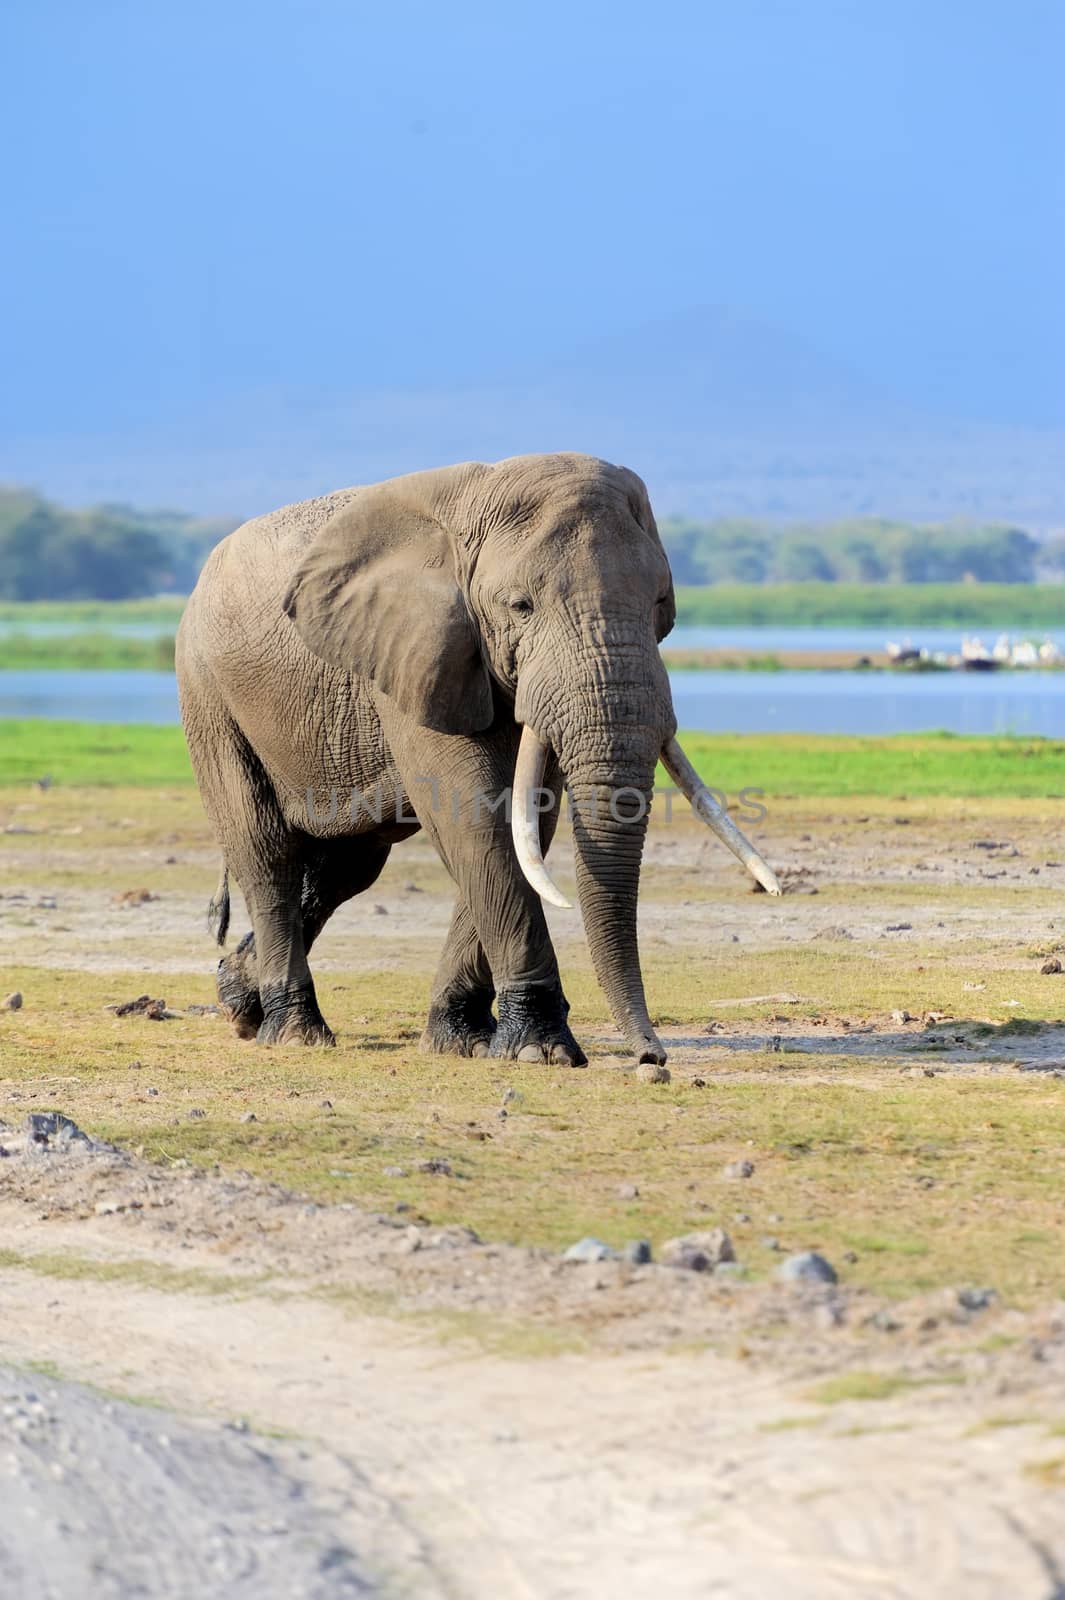 Elephant in National park of Kenya by byrdyak